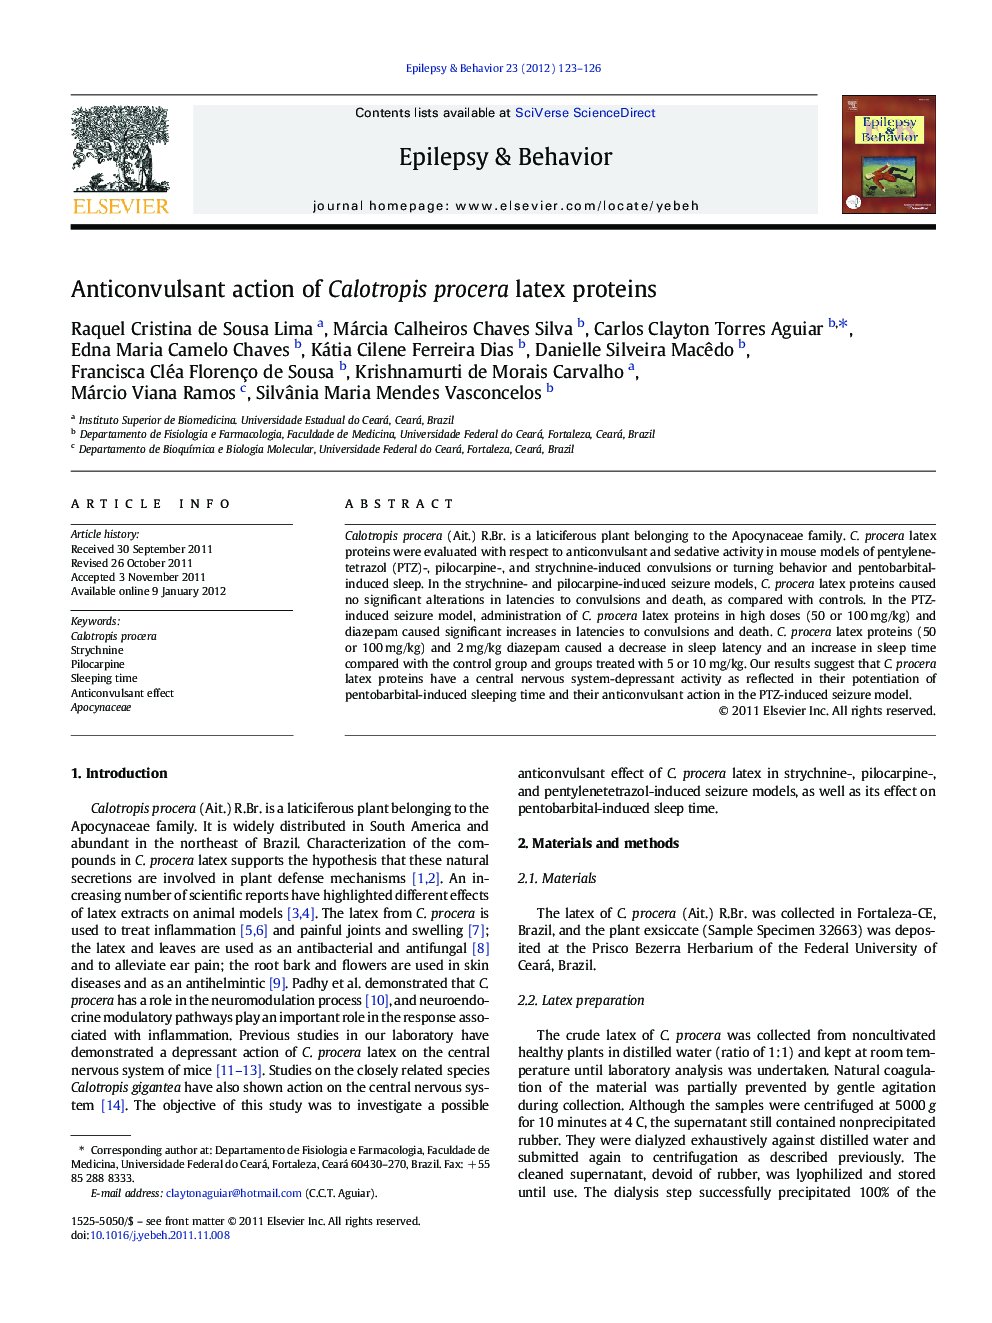 Anticonvulsant action of Calotropis procera latex proteins